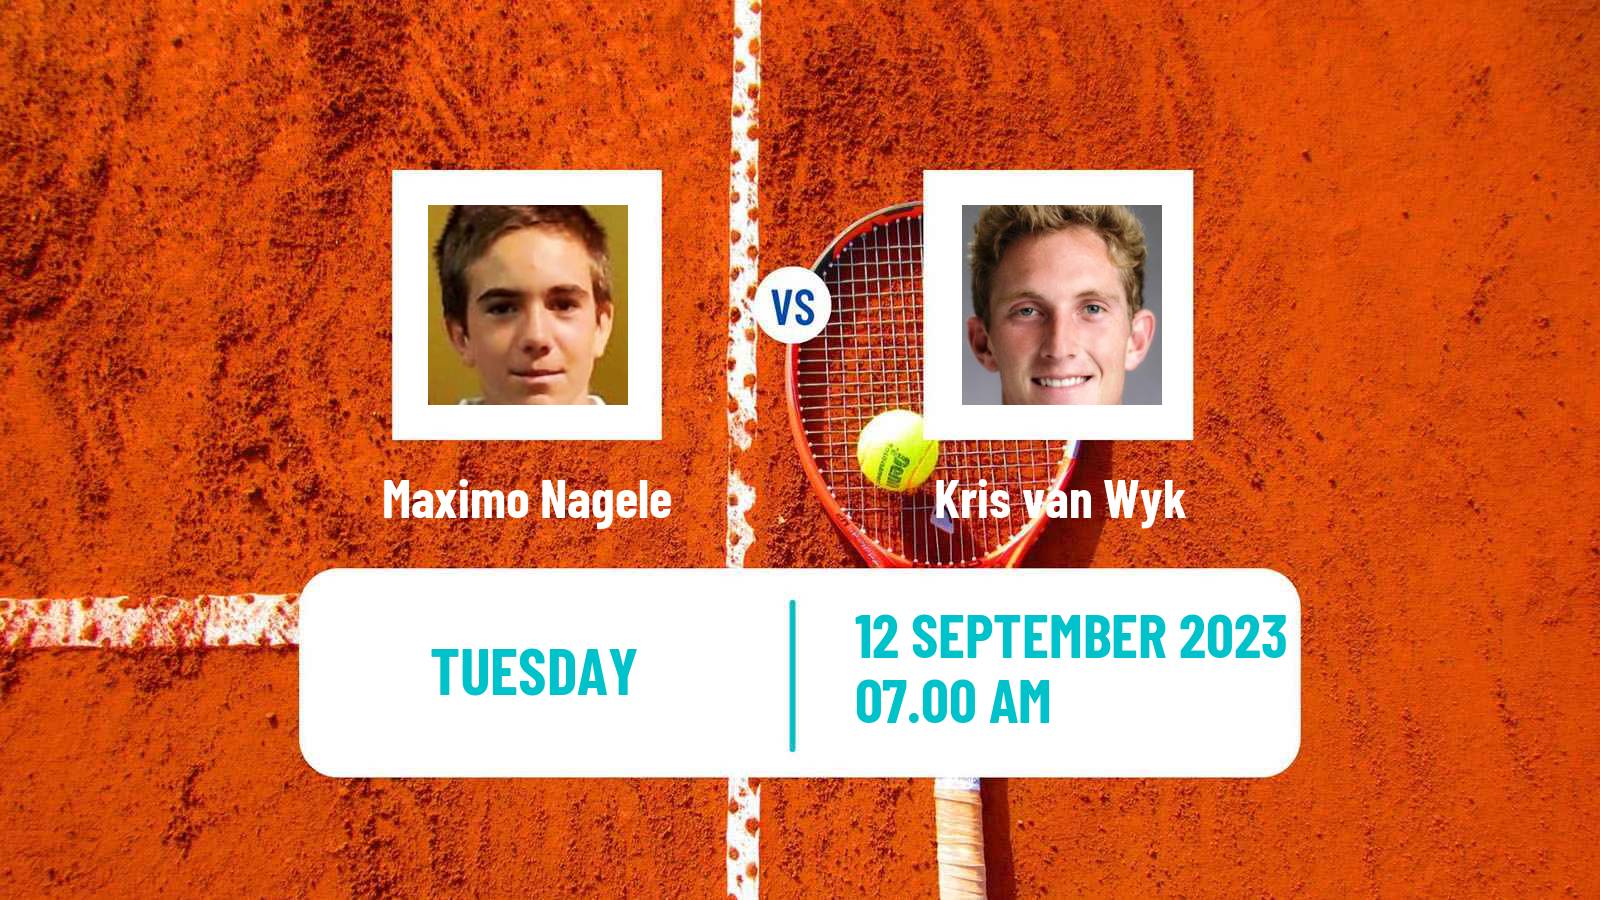 Tennis ITF M25 Monastir 6 Men Maximo Nagele - Kris van Wyk